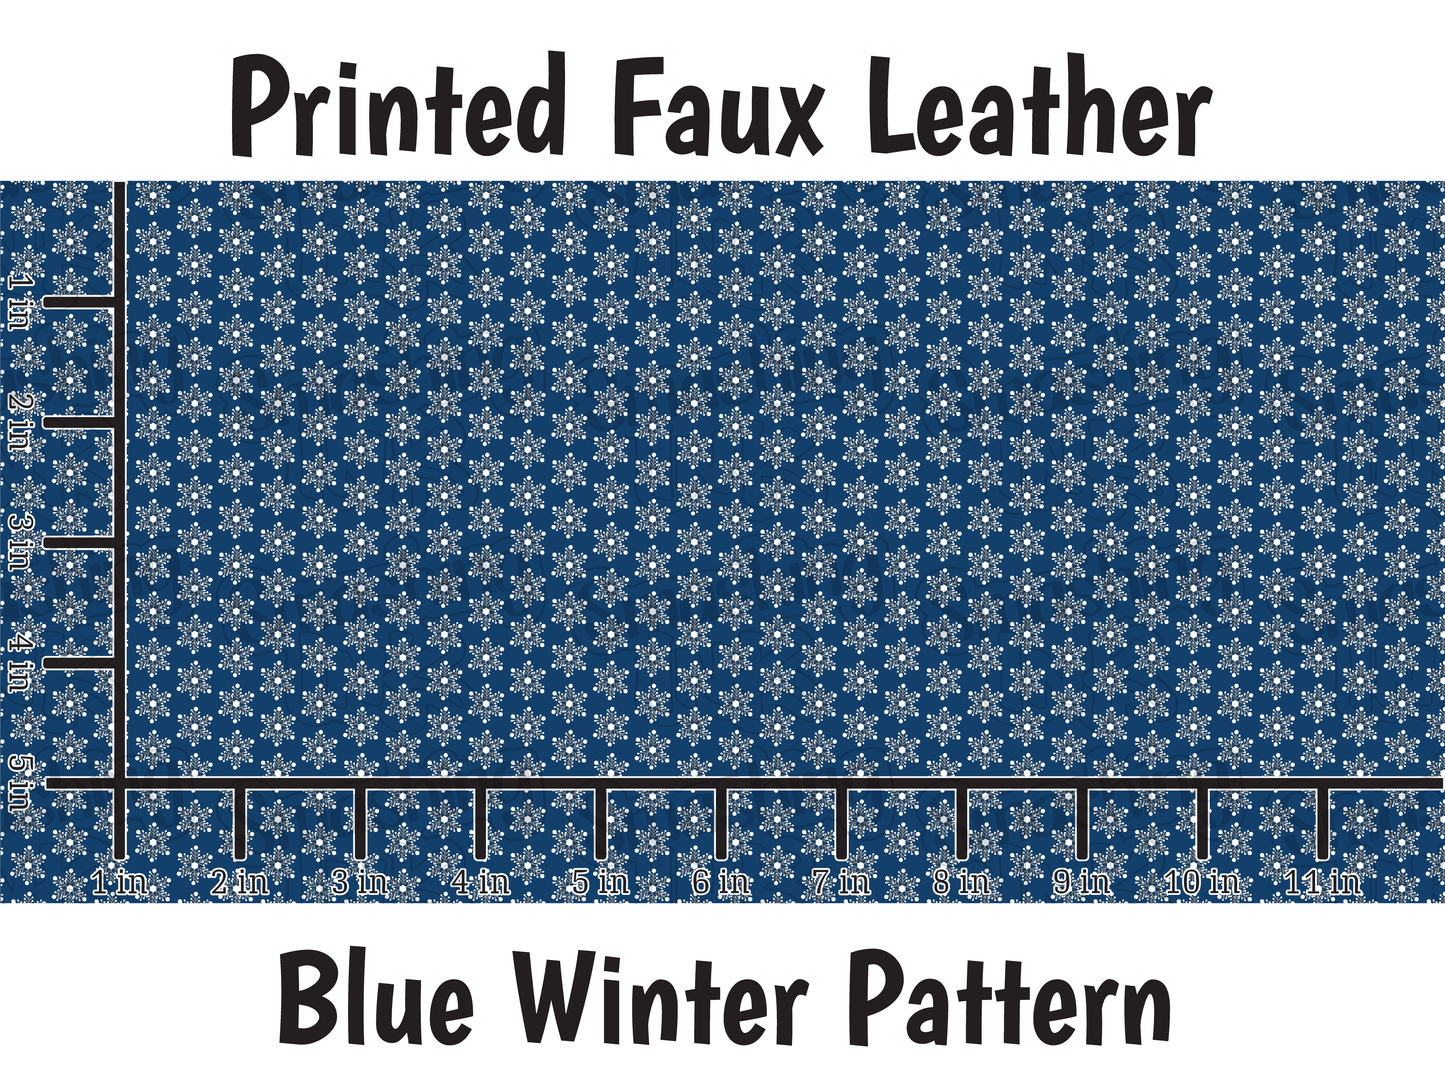 Blue Winter Pattern - Faux Leather Sheet (SHIPS IN 3 BUS DAYS)